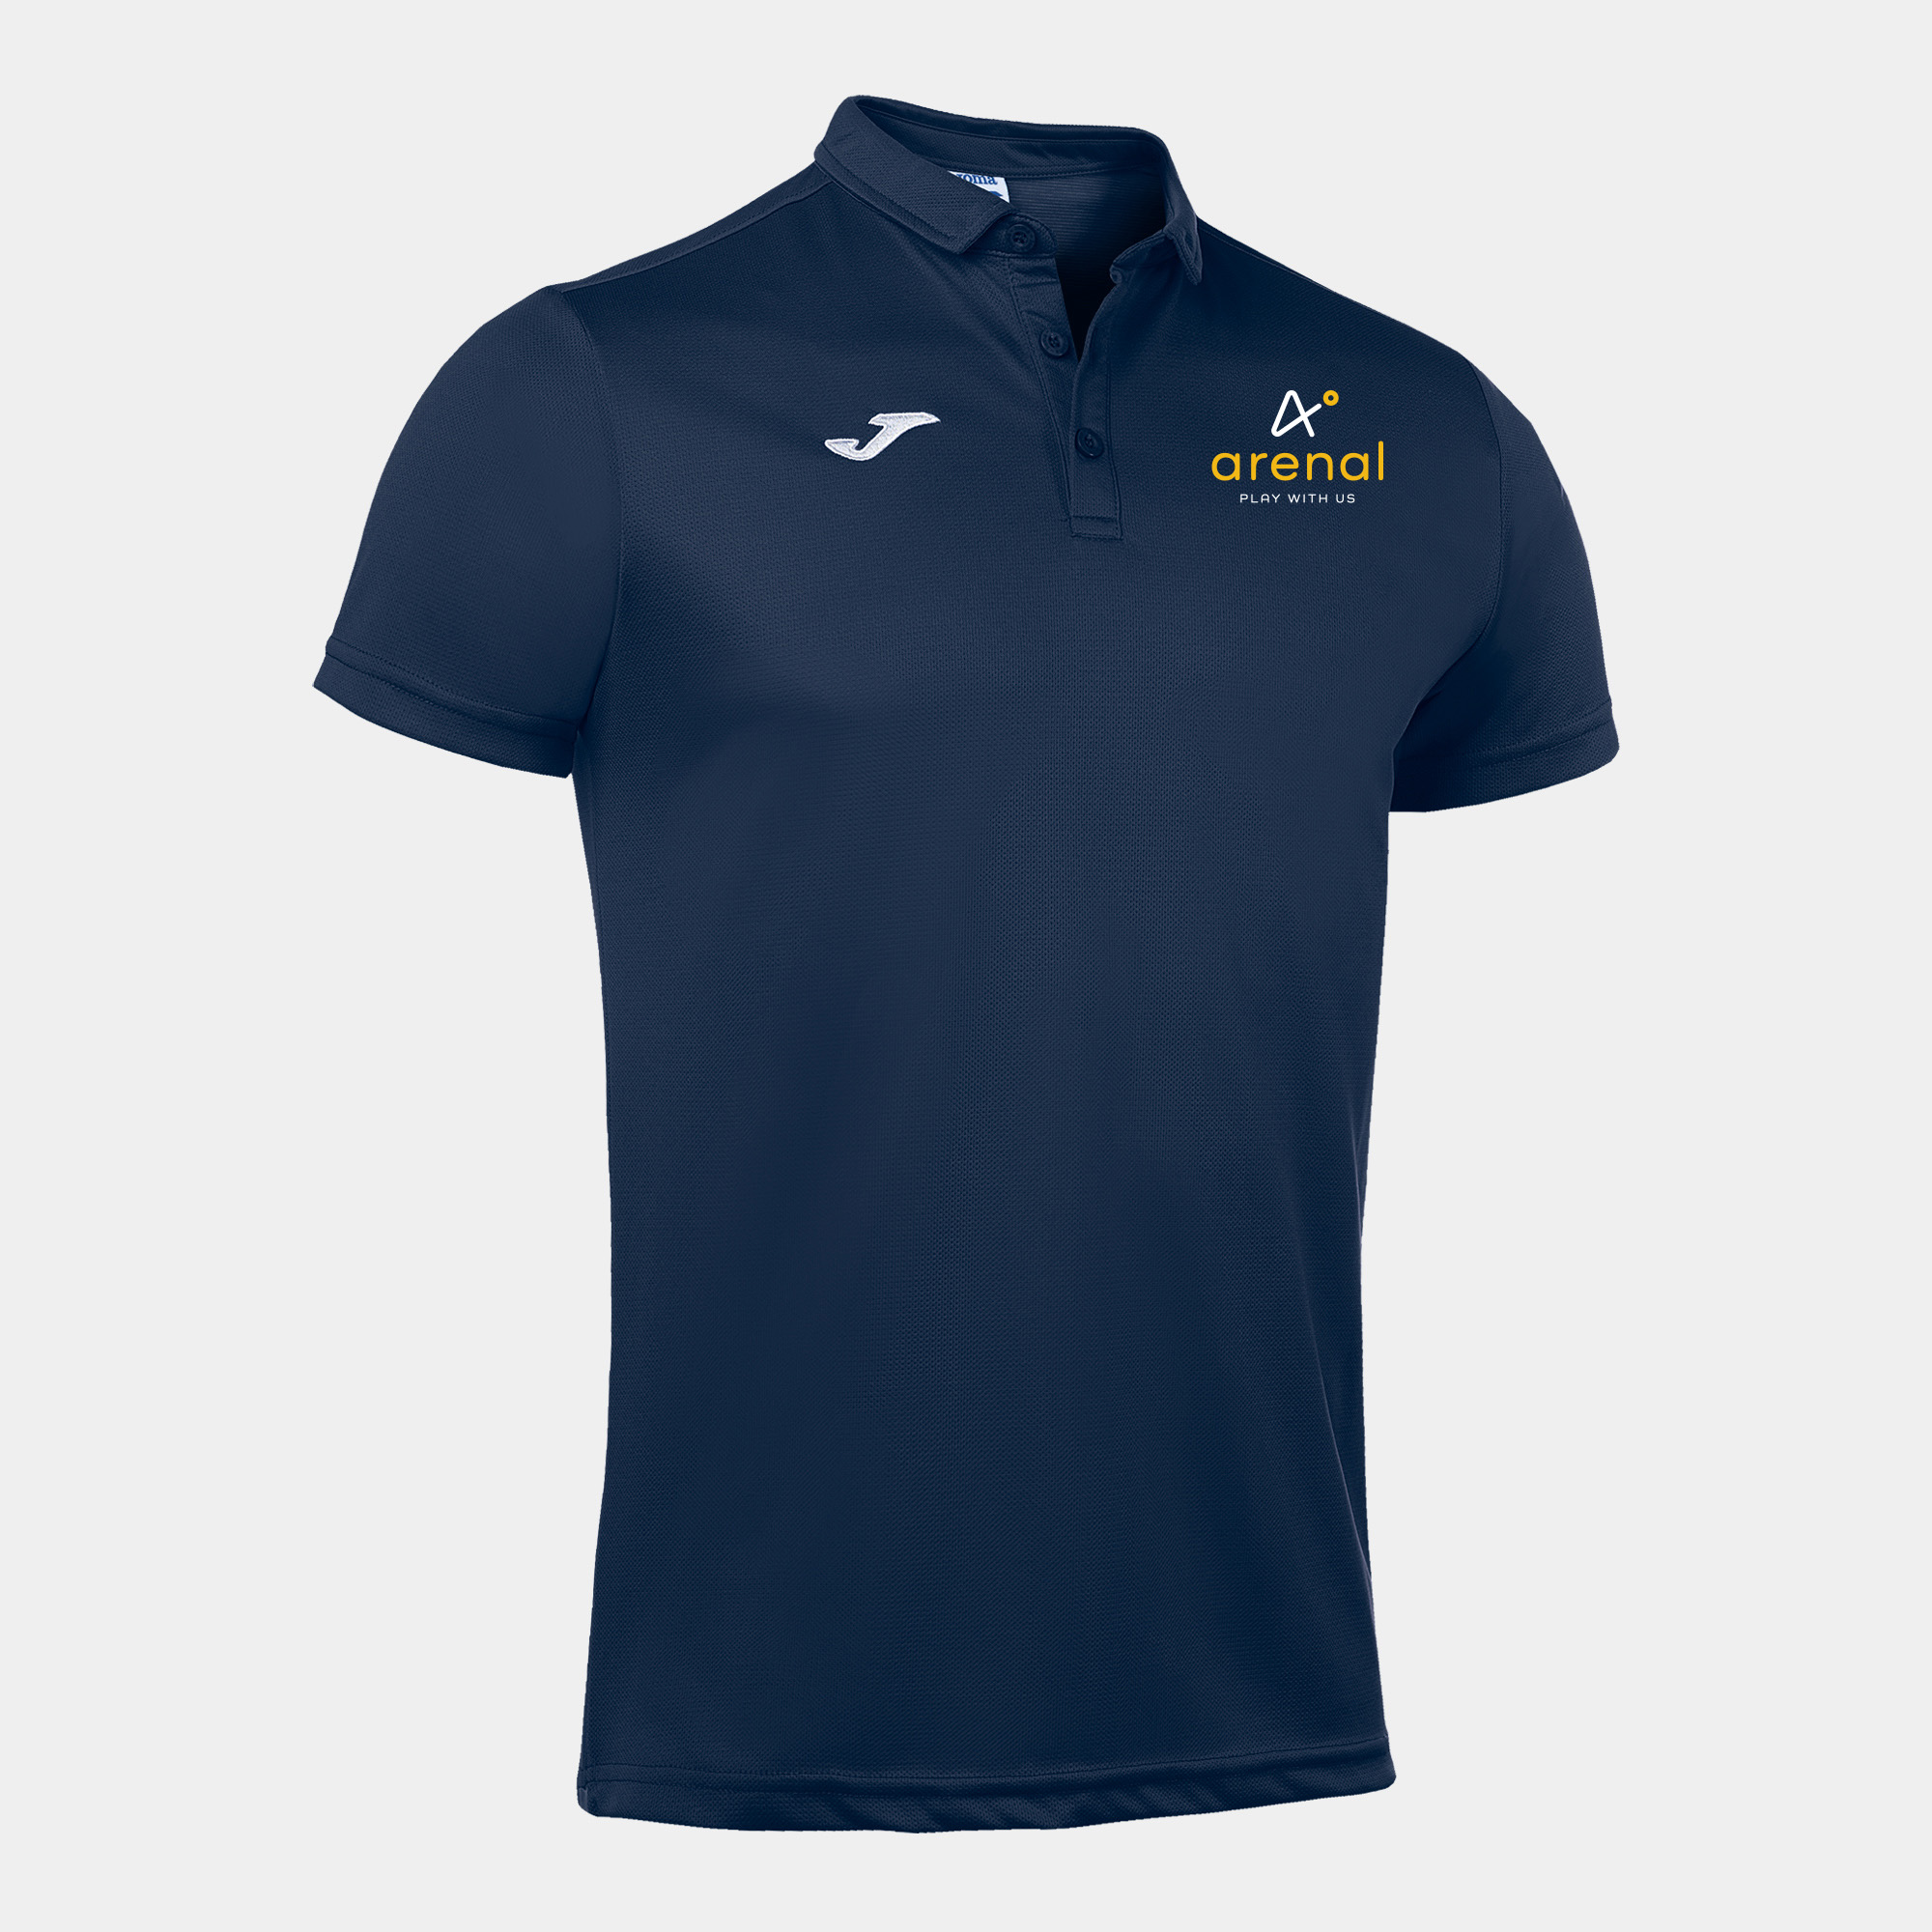 Arenal - Polo shirt short-sleeve man Hobby navy blue